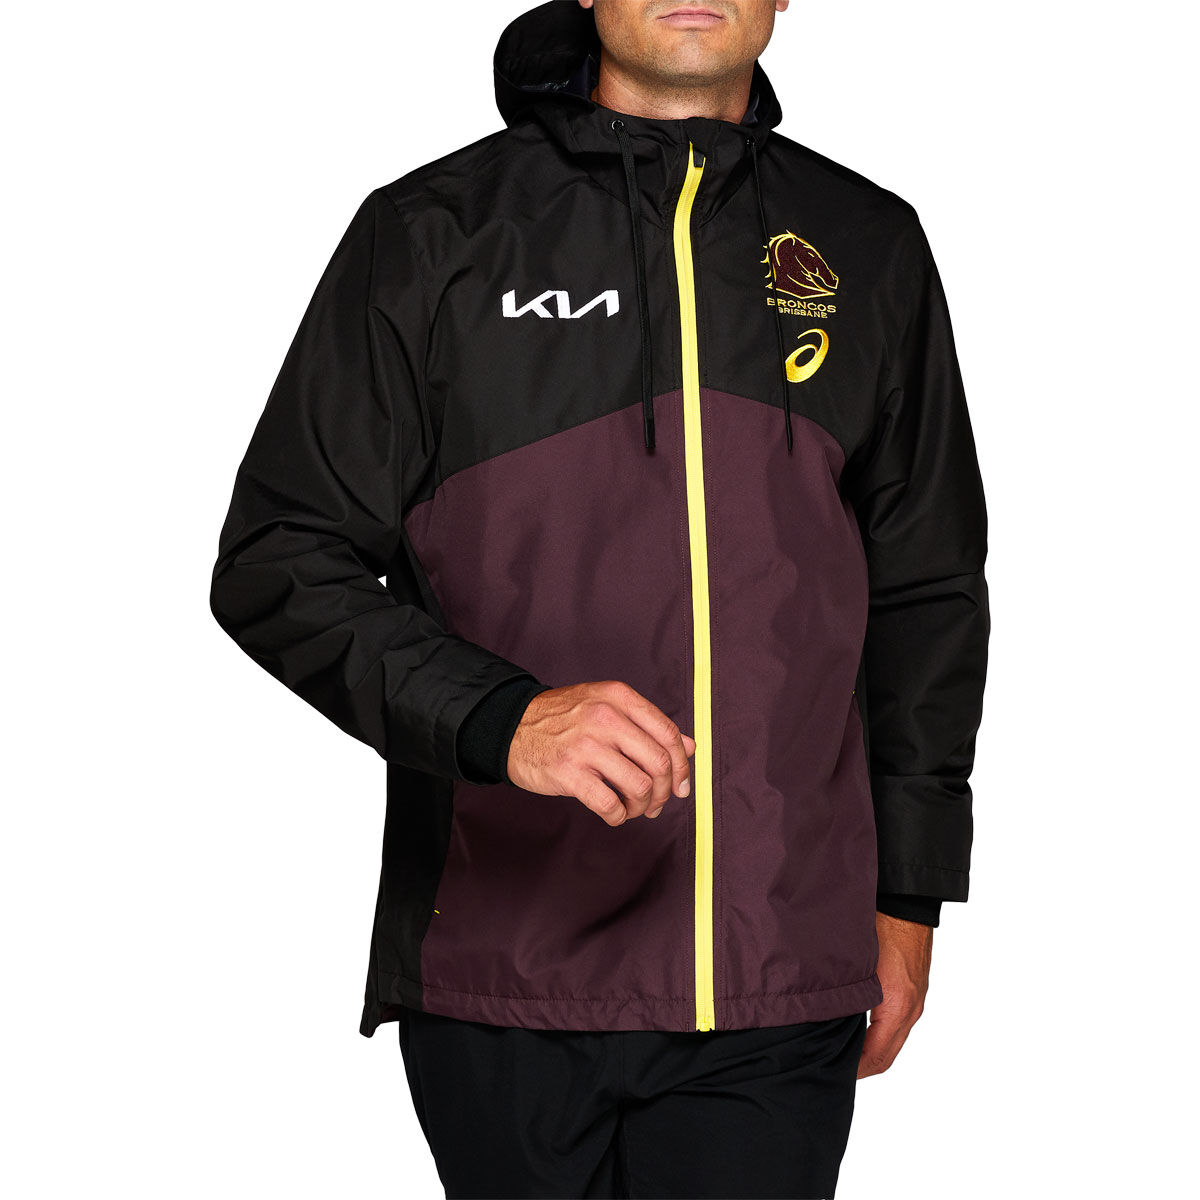 BLK Official England Rugby League League Wet Weather Junior Jacket 